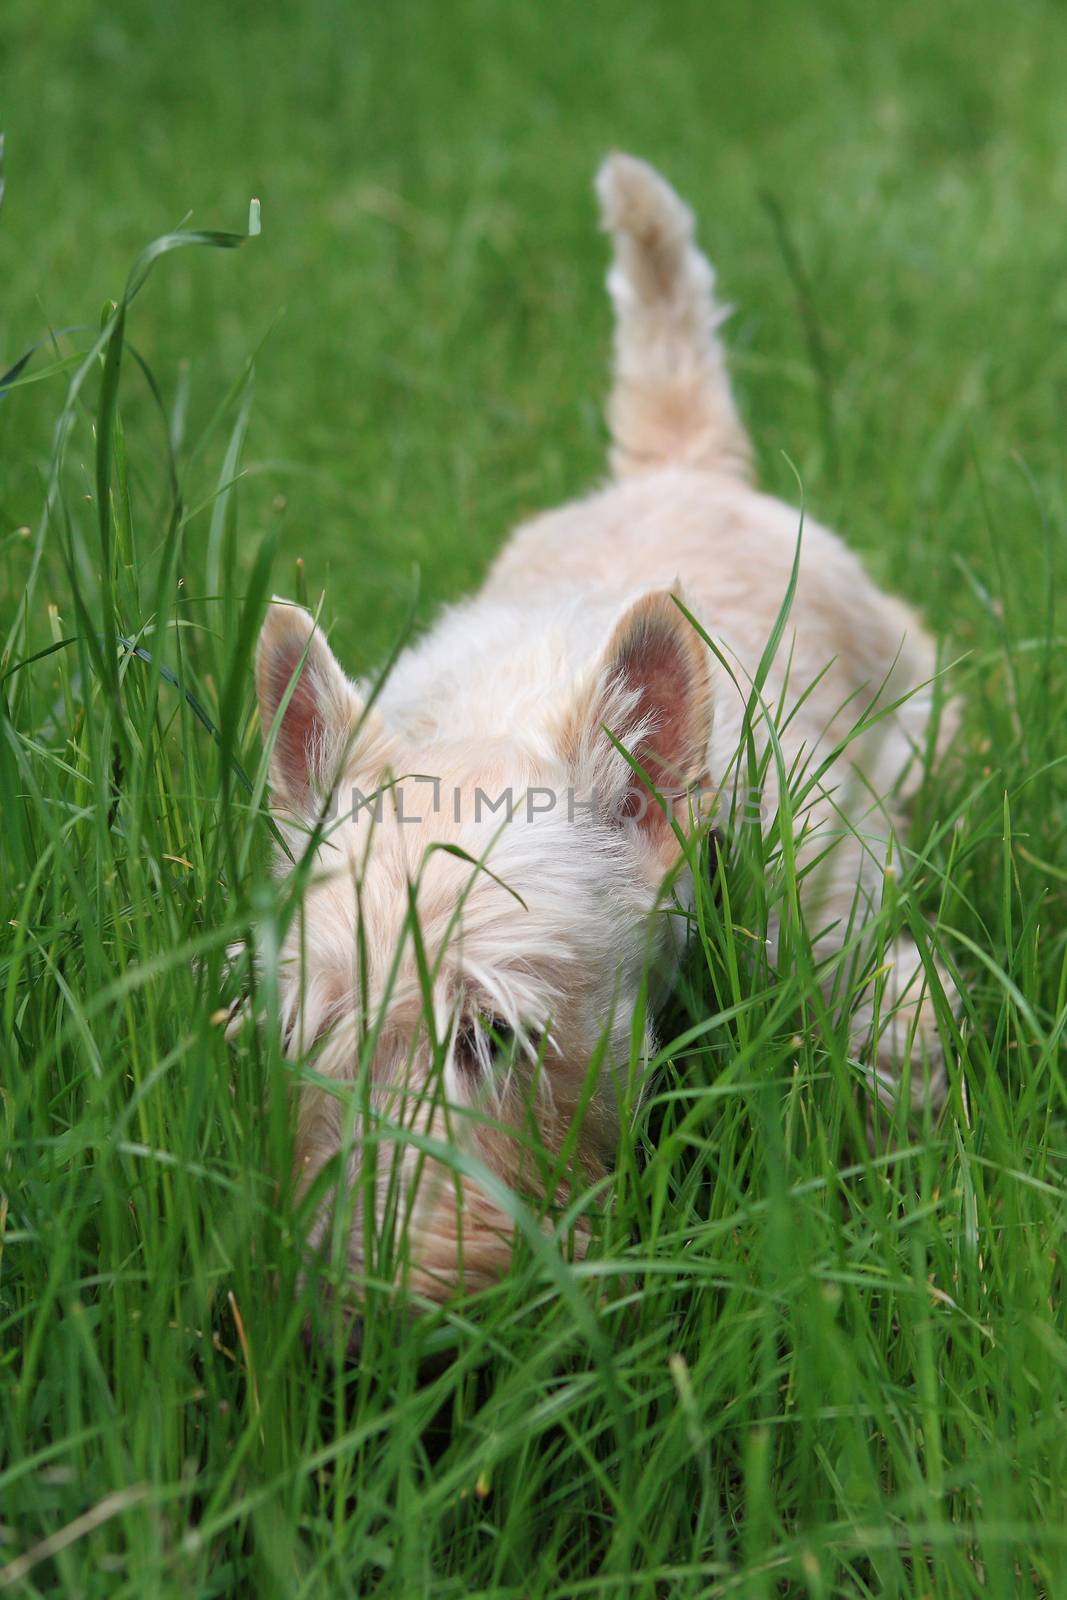 Wheaten Scottish Terrier walks in green grass